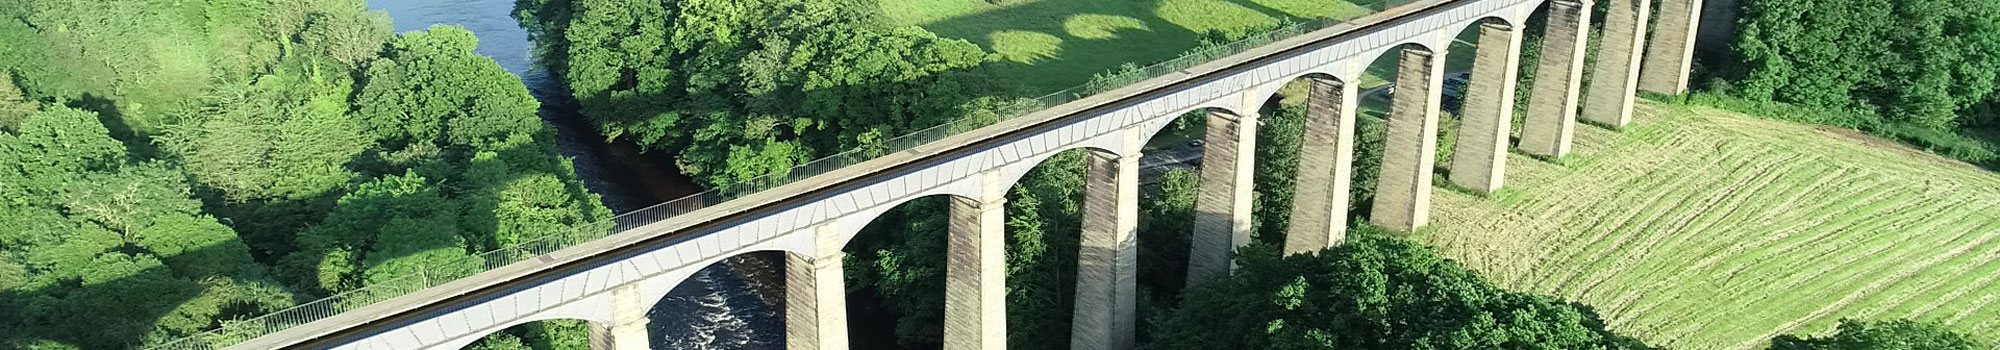 Drone footage of Pontcysyllte Aqueduct in Wrexham, North Wales